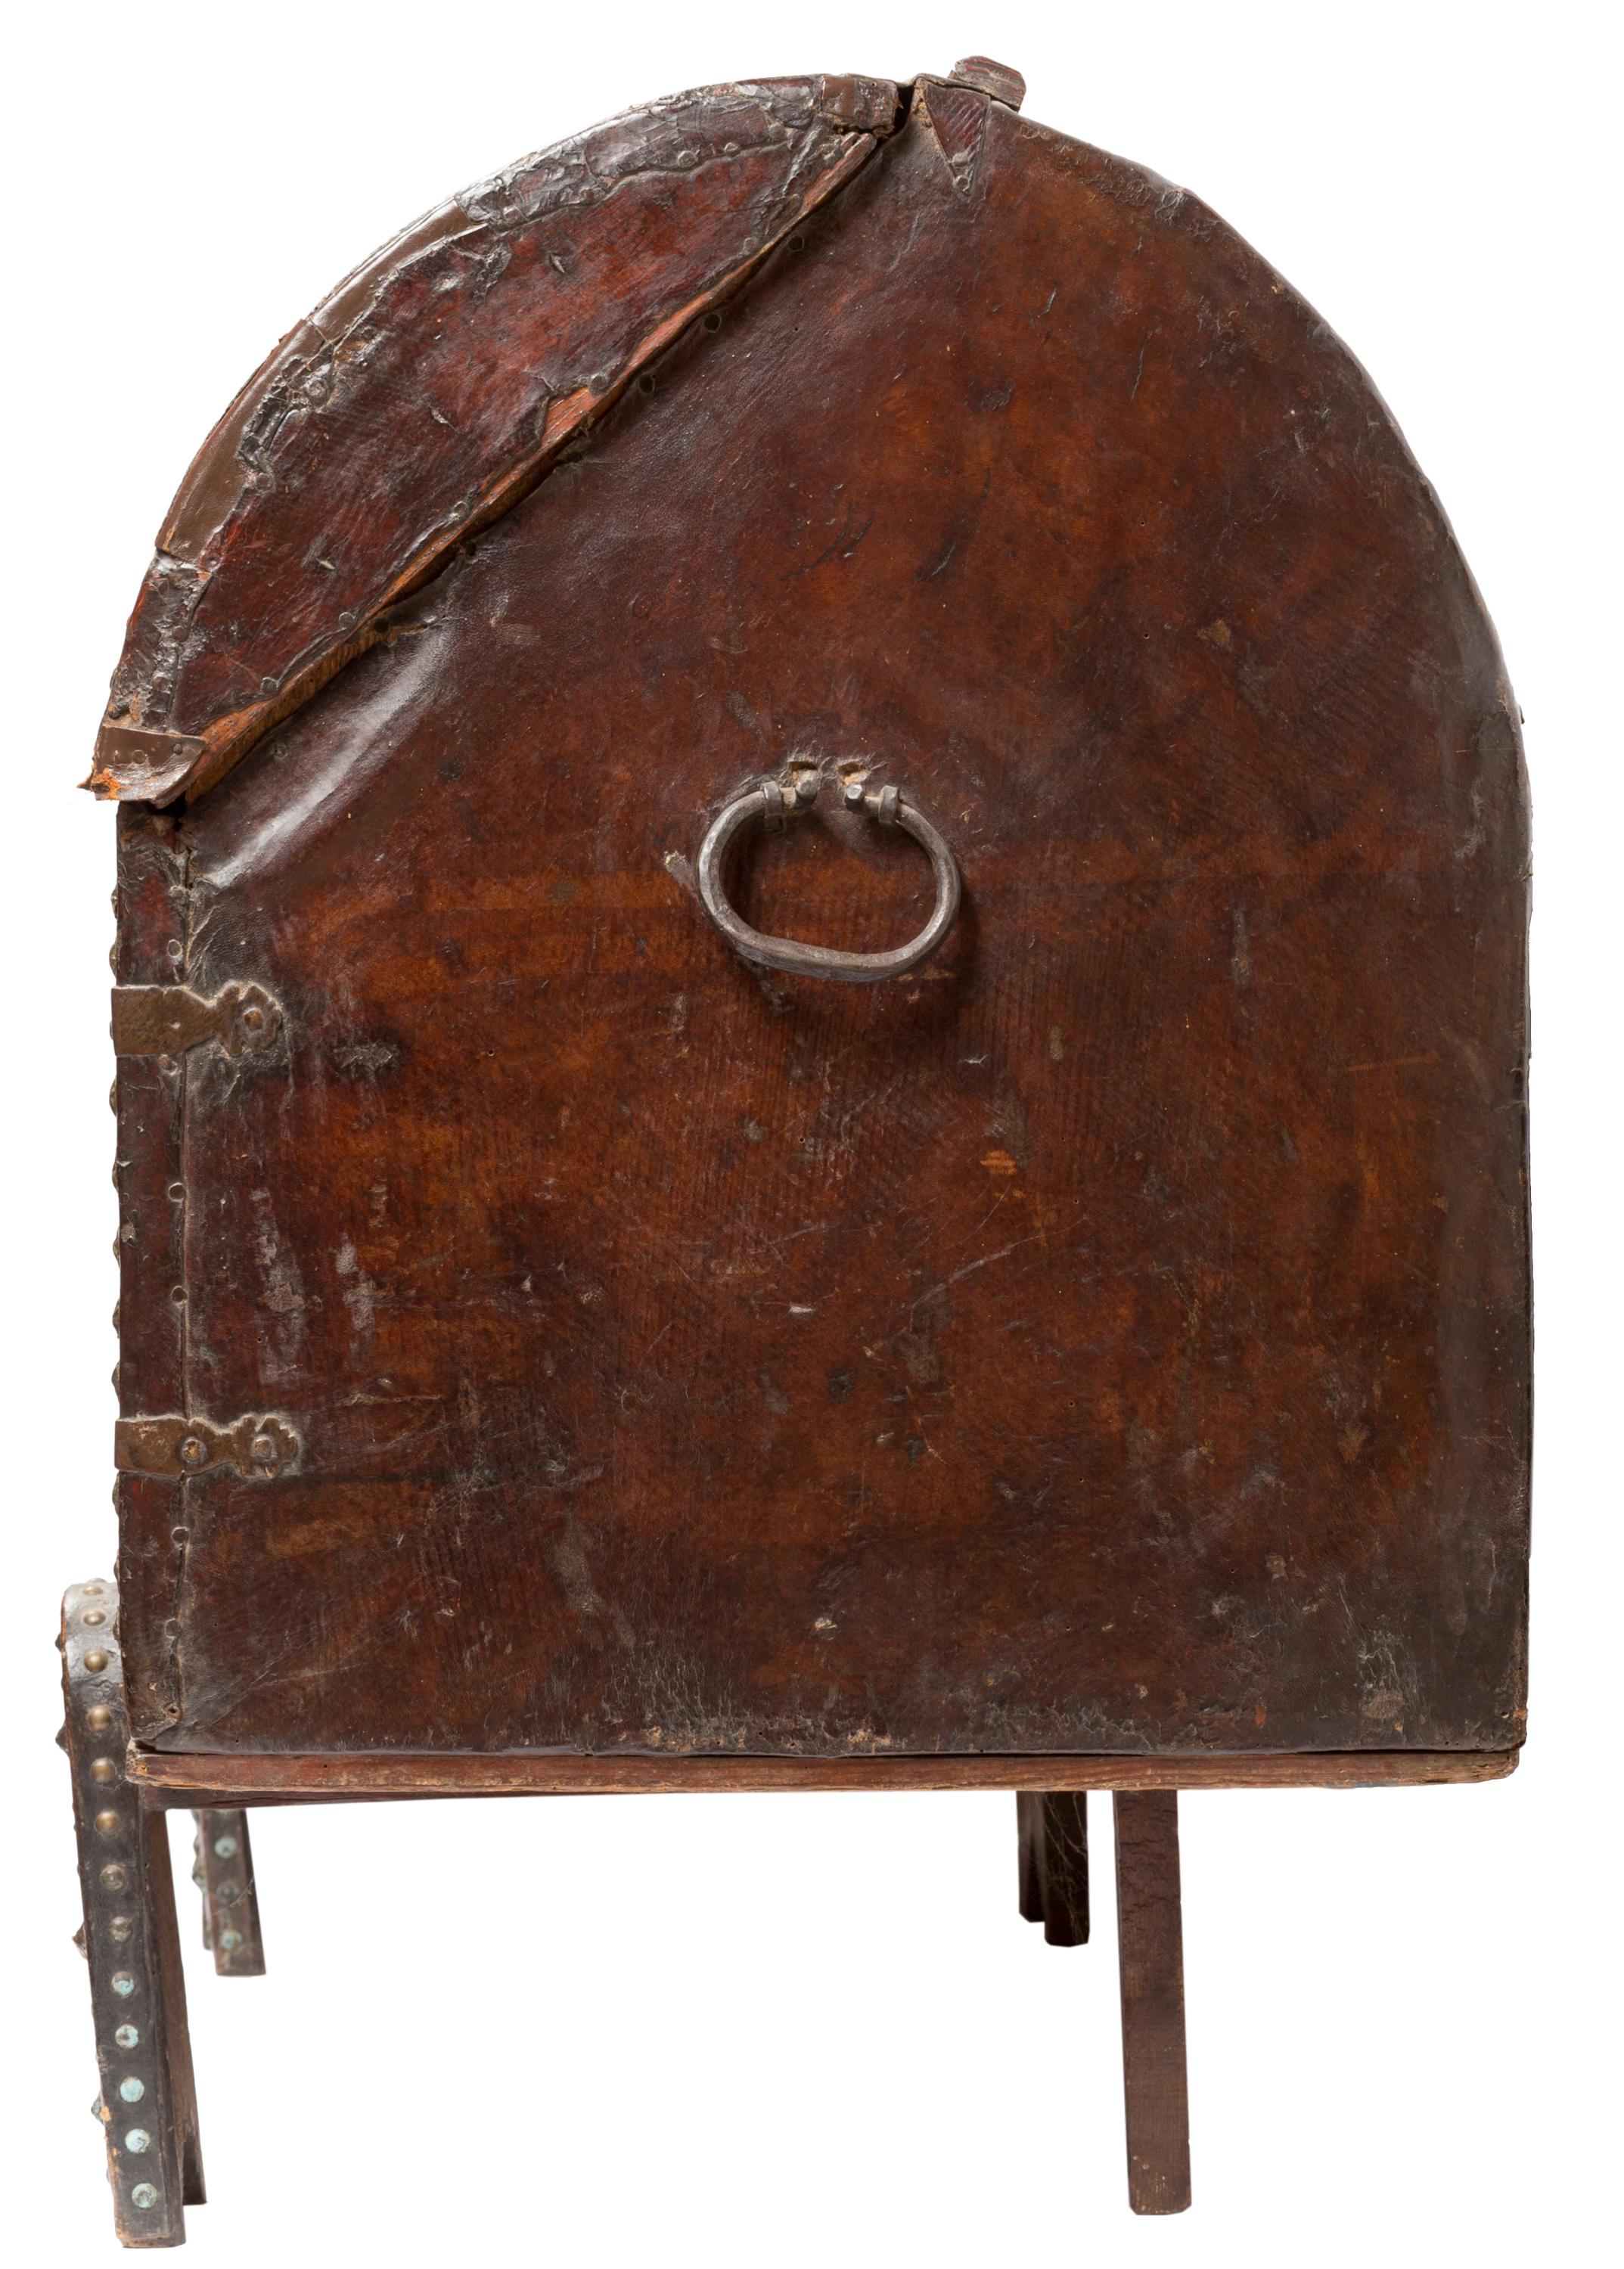 18th Century Spanish Leather Trunk with Studded Nailhead Detail (Handgefertigt)